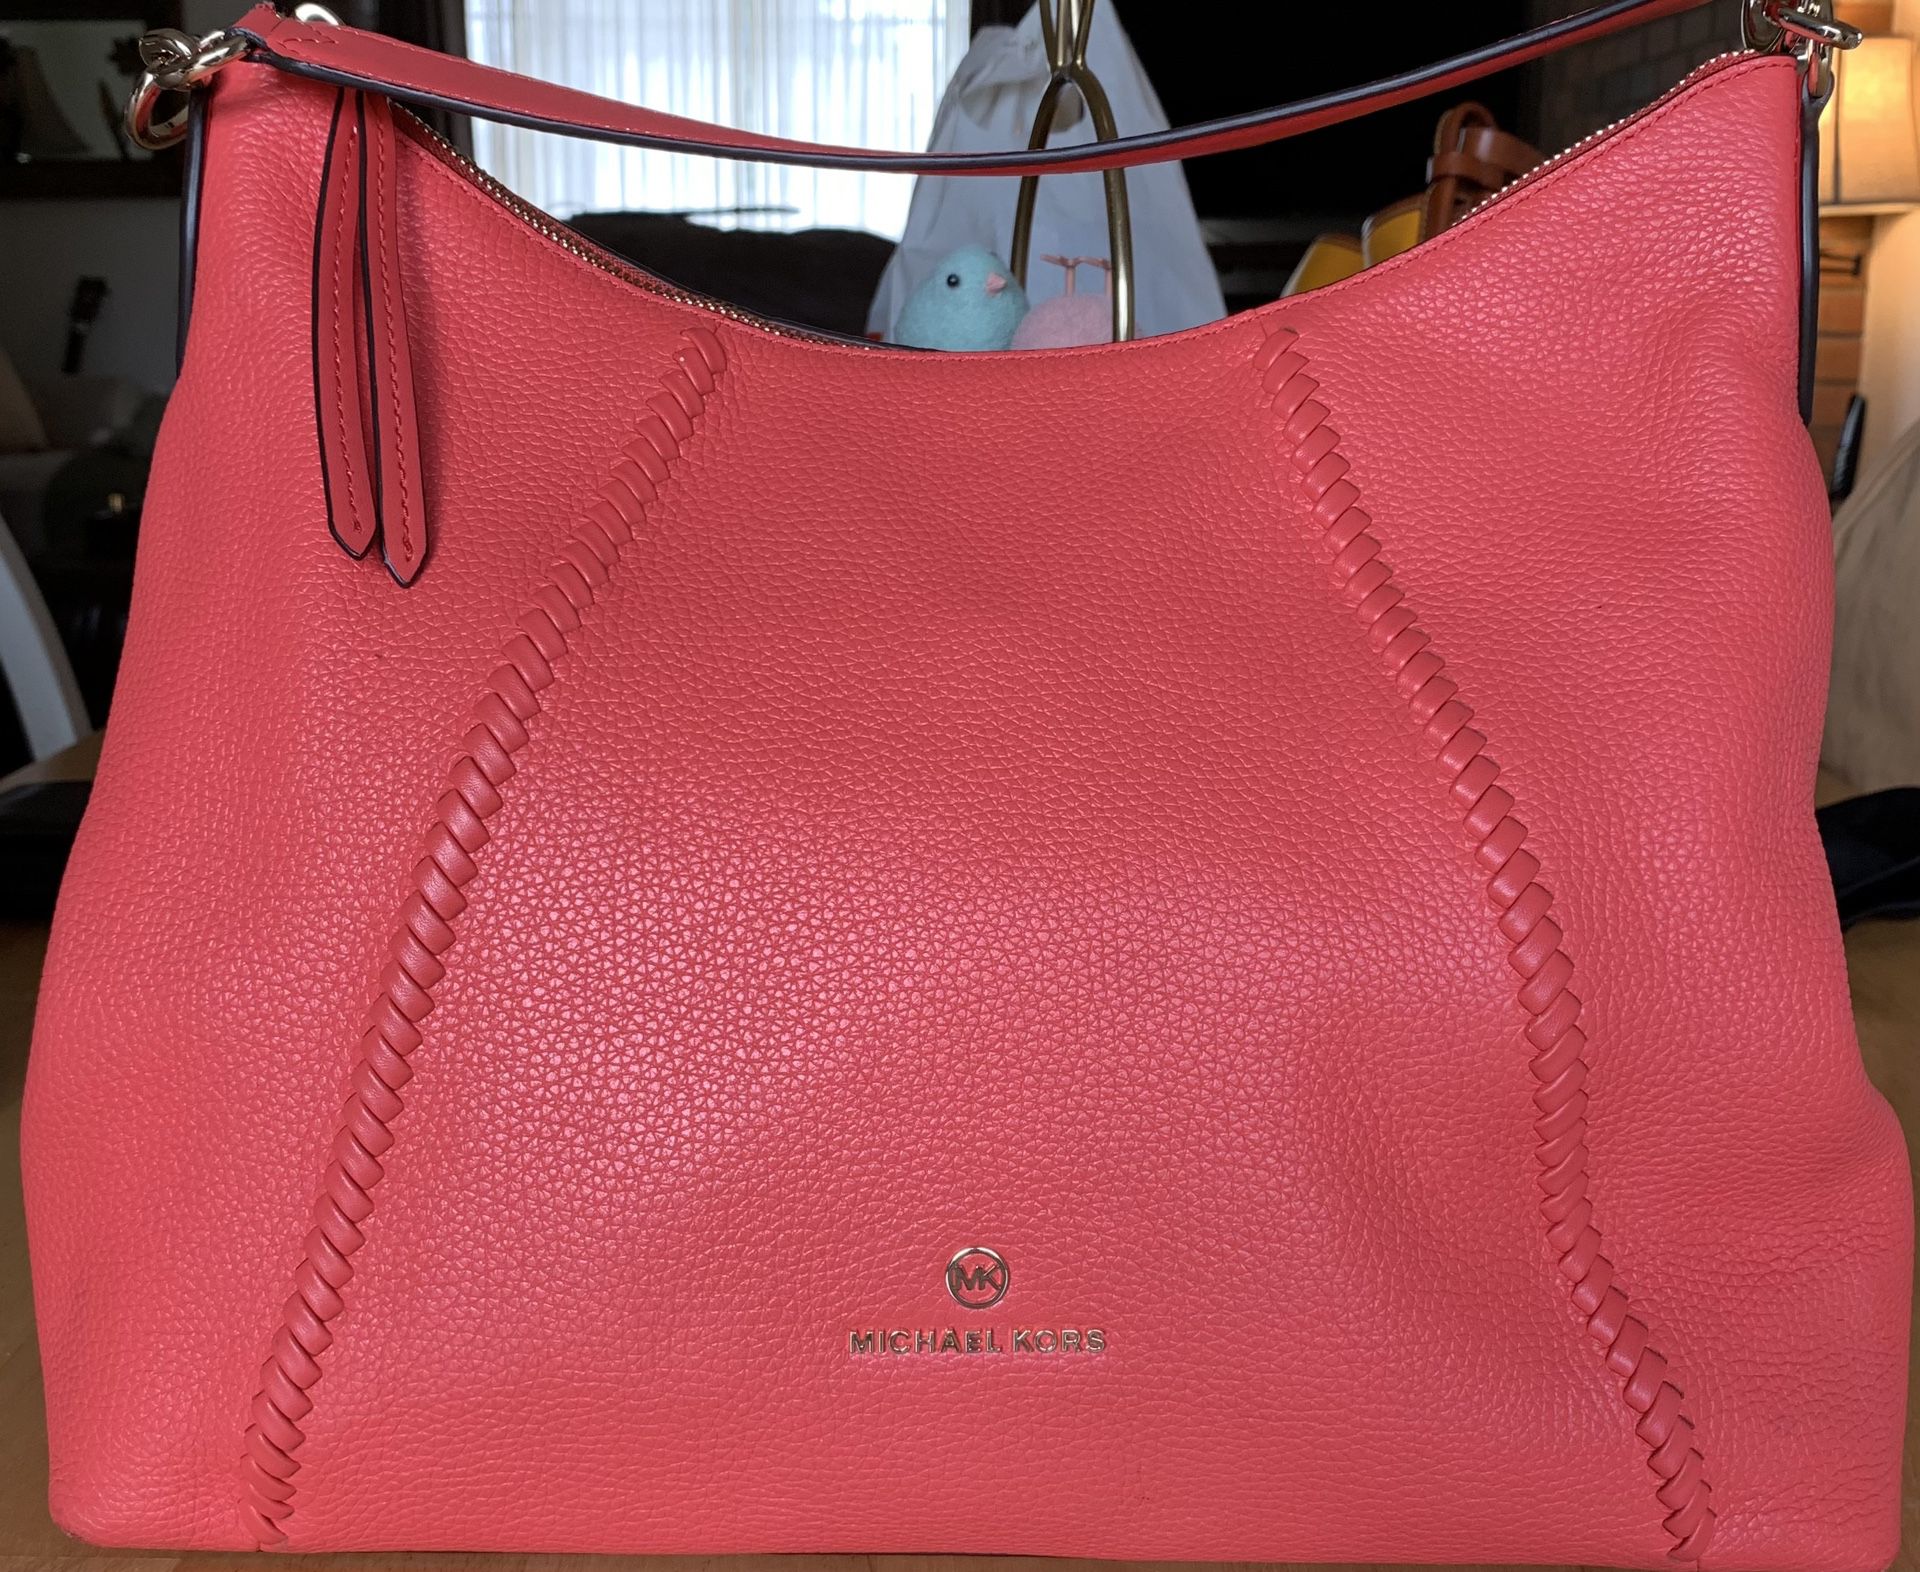 Michael Kors Sienna Large Leather Convertible Shoulder Bag Dahlia Pink